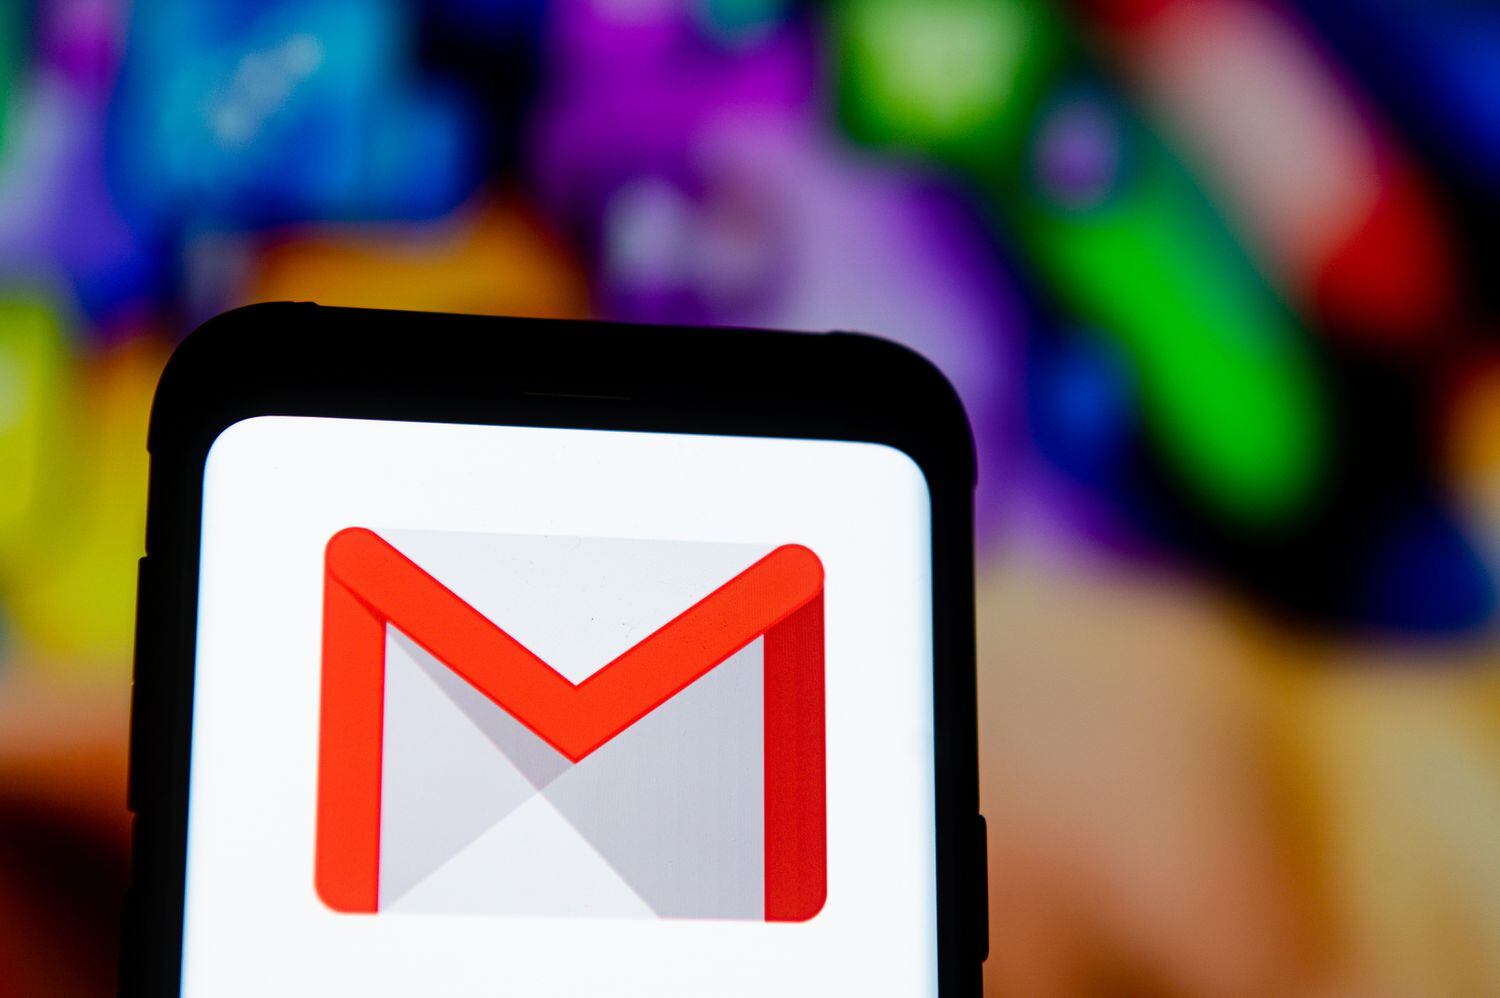 Logo de Gmail.